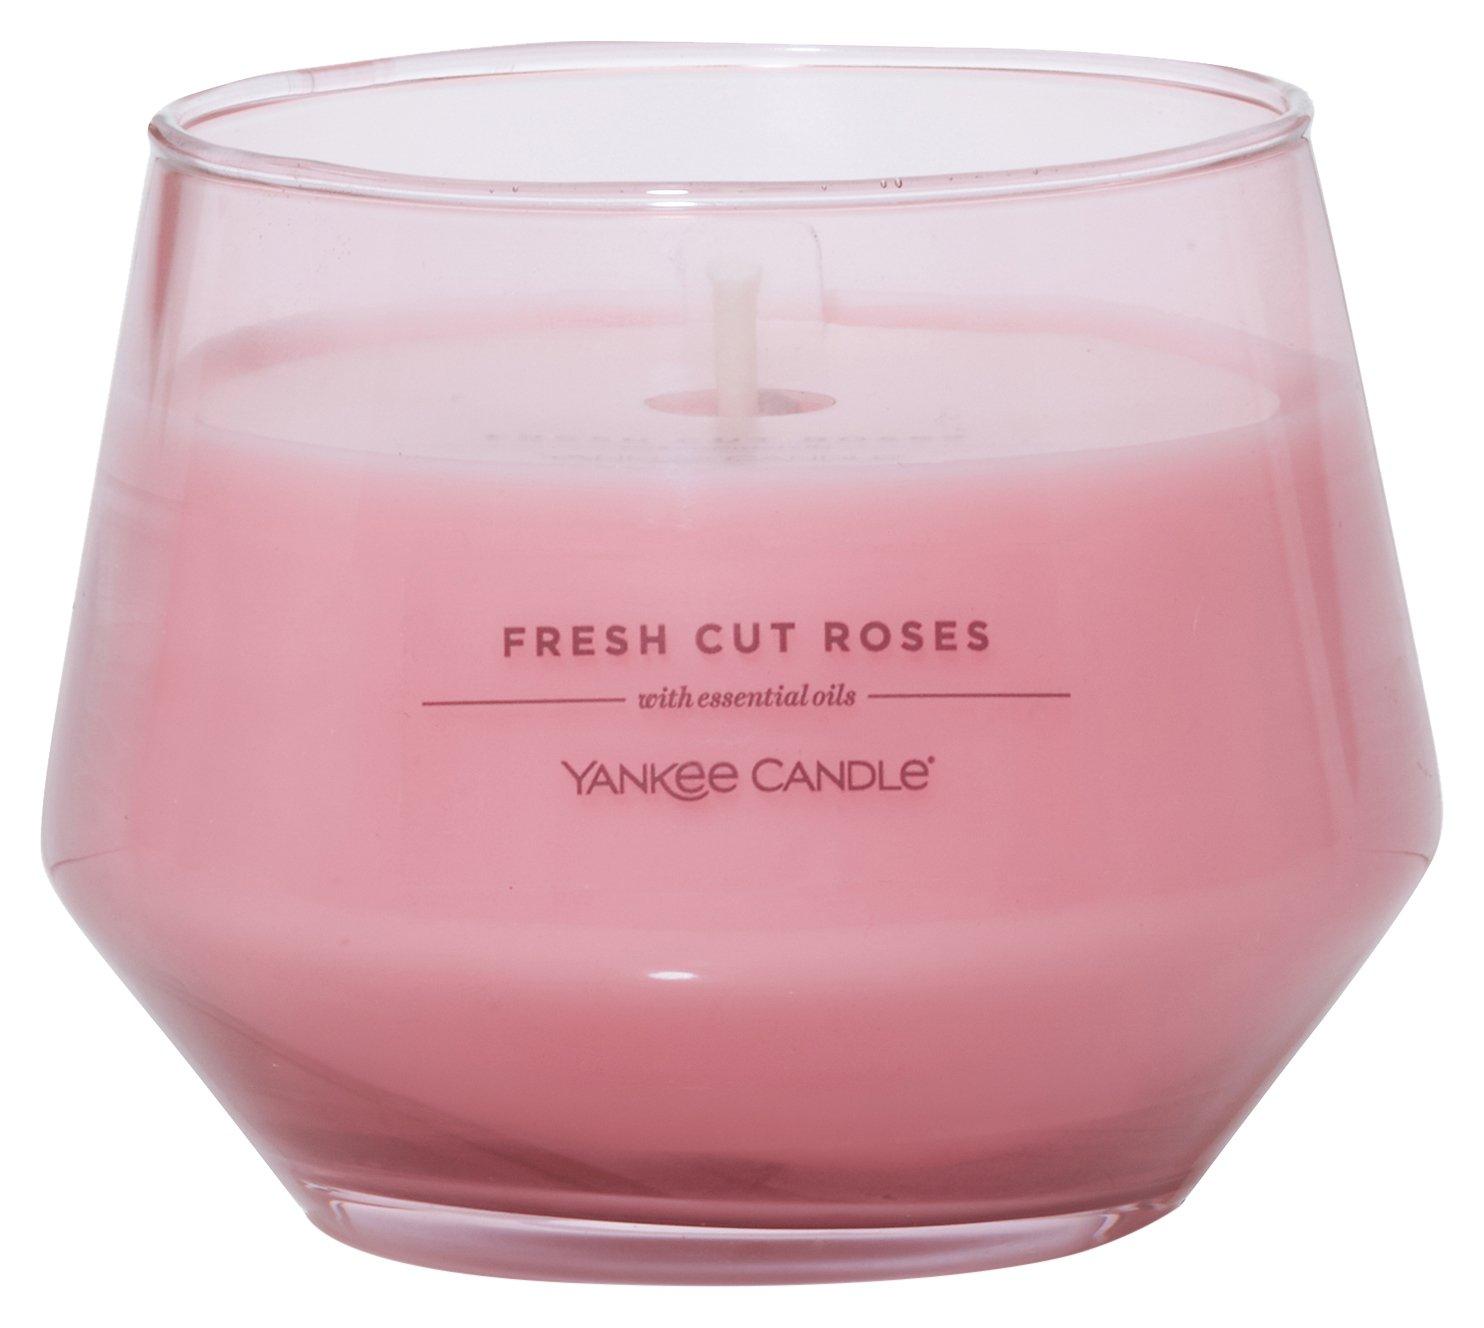 Yankee Candle 10oz Fresh Cut Roses Candle